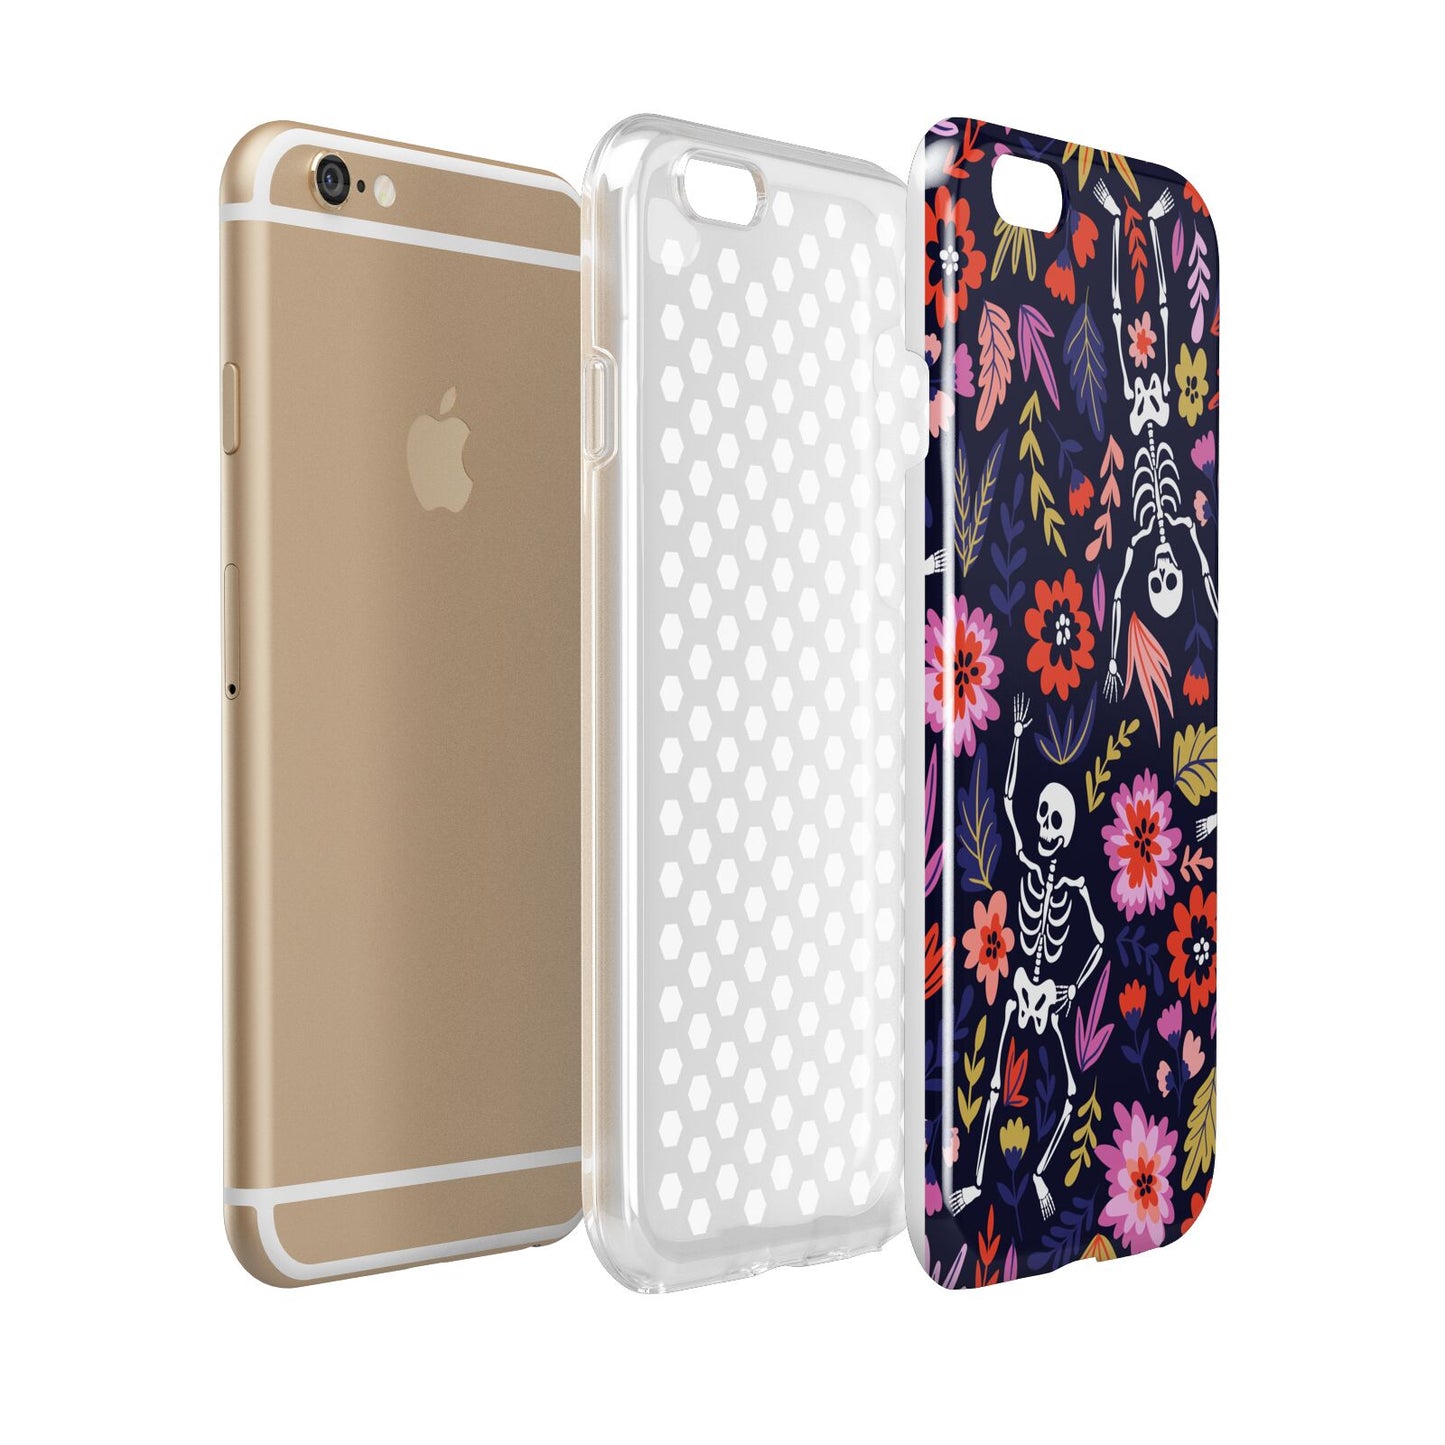 Floral Skeleton Apple iPhone 6 3D Tough Case Expanded view